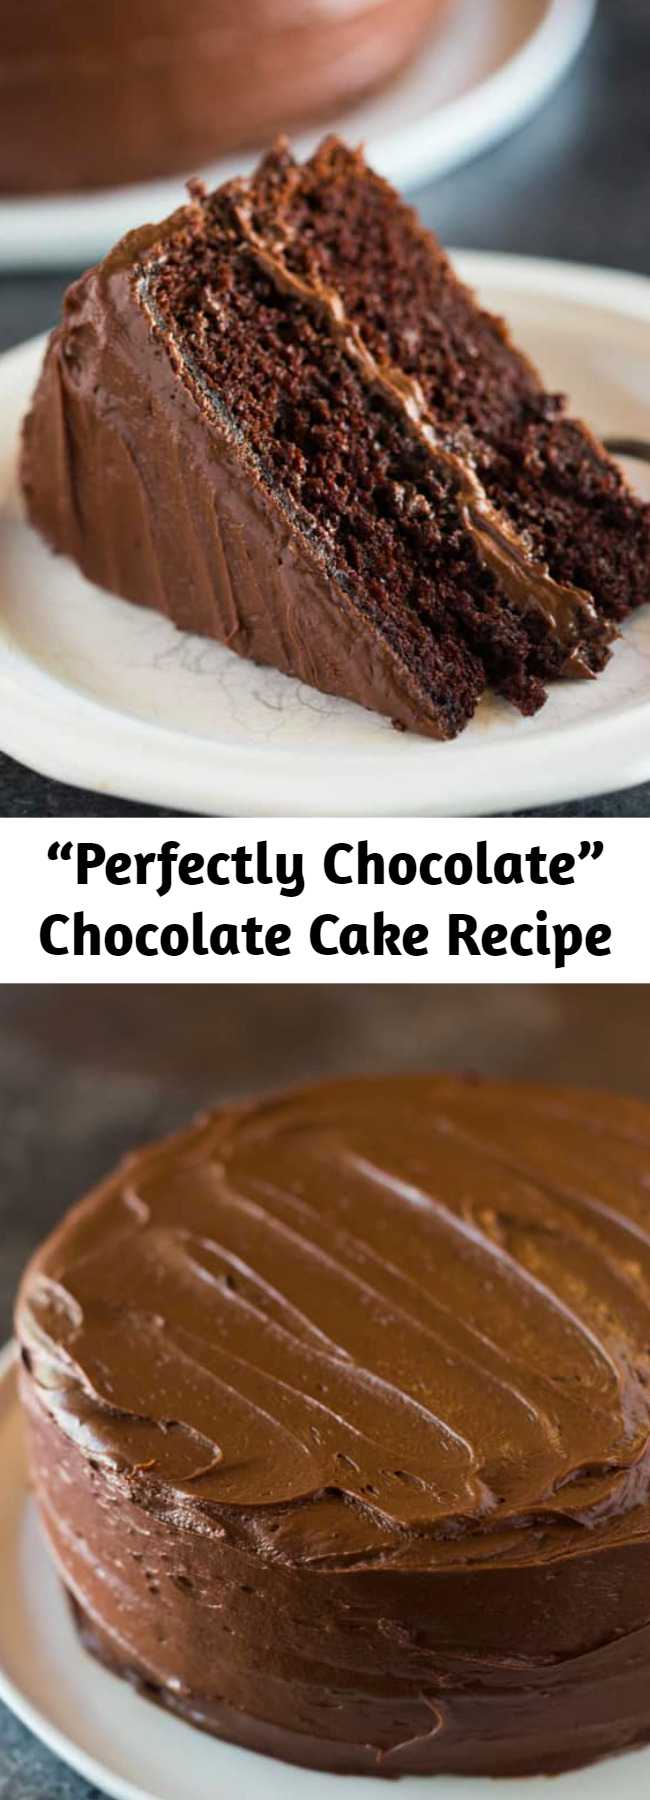 “Perfectly Chocolate” Chocolate Cake Recipe – Mom Secret Ingrediets